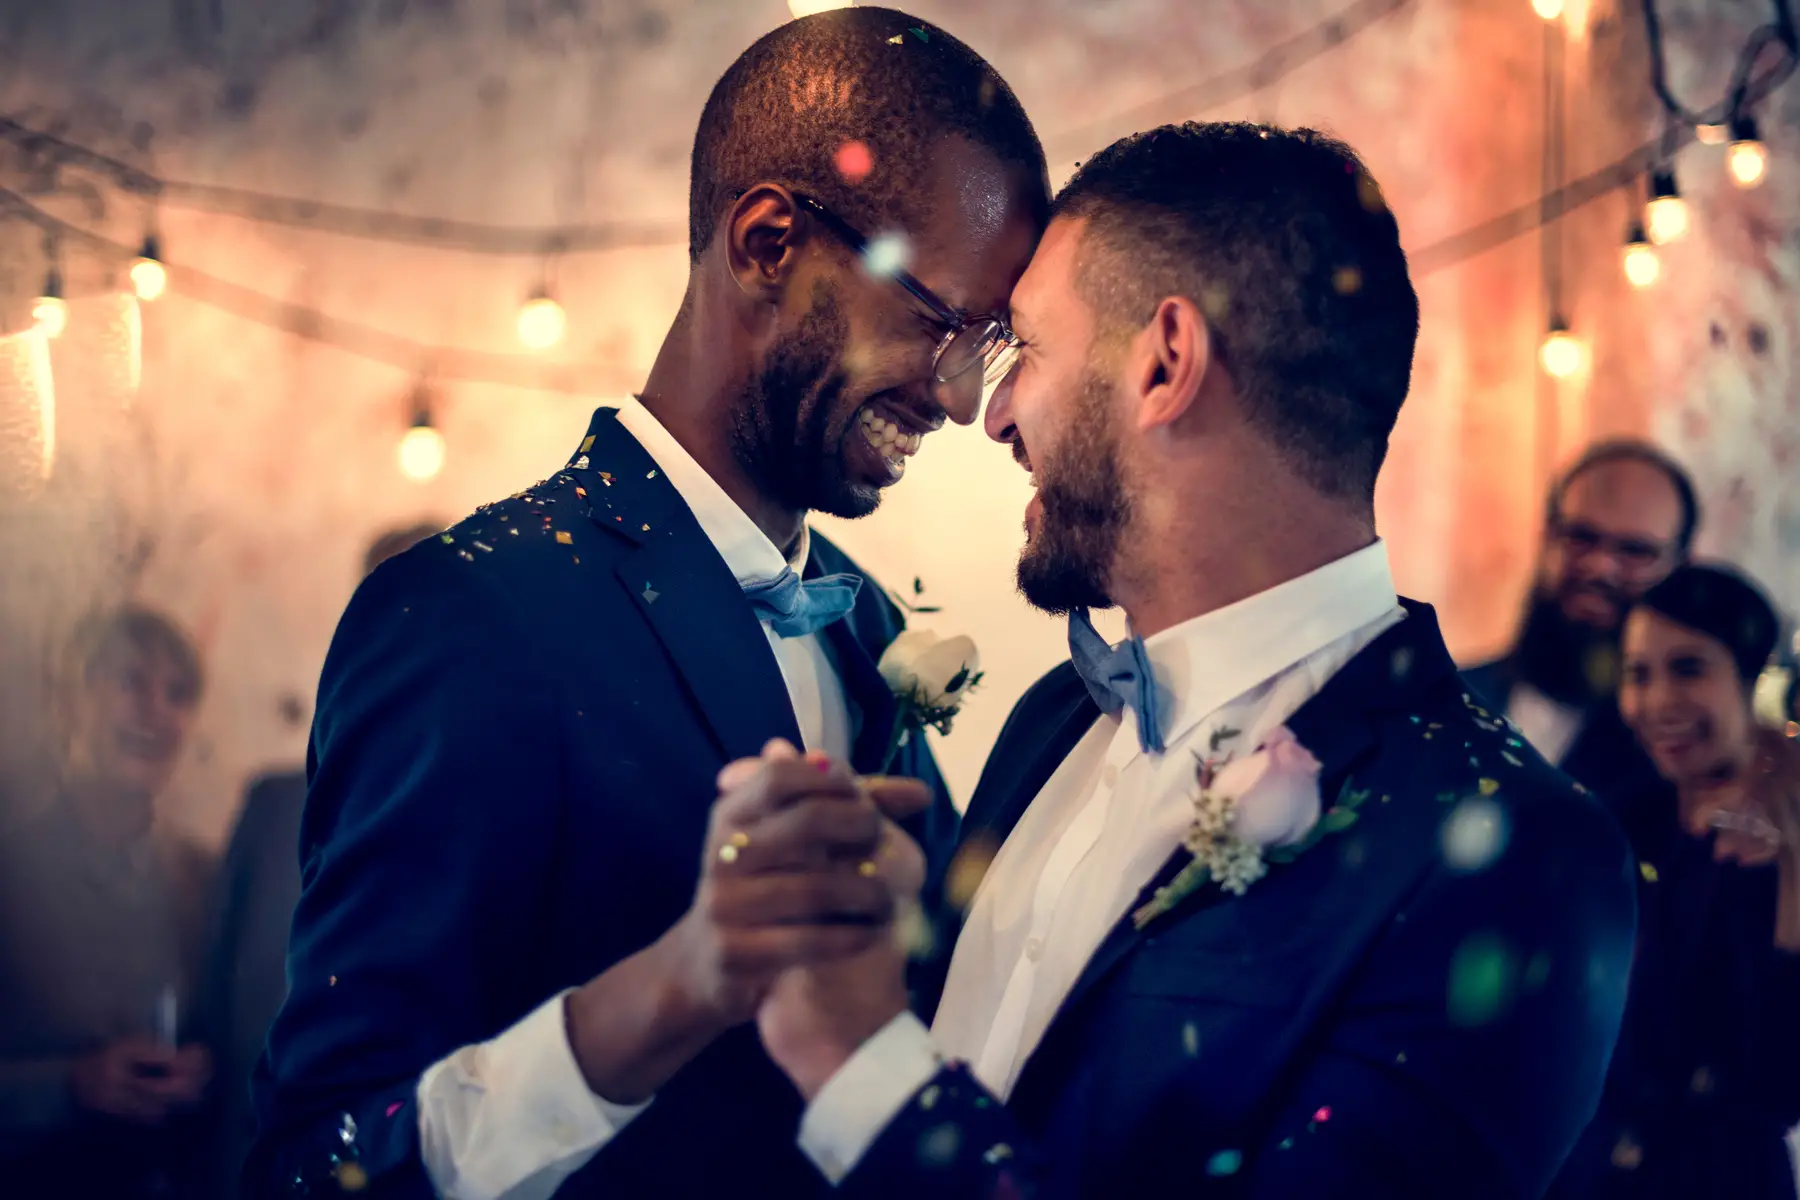 two men celebrating their wedding